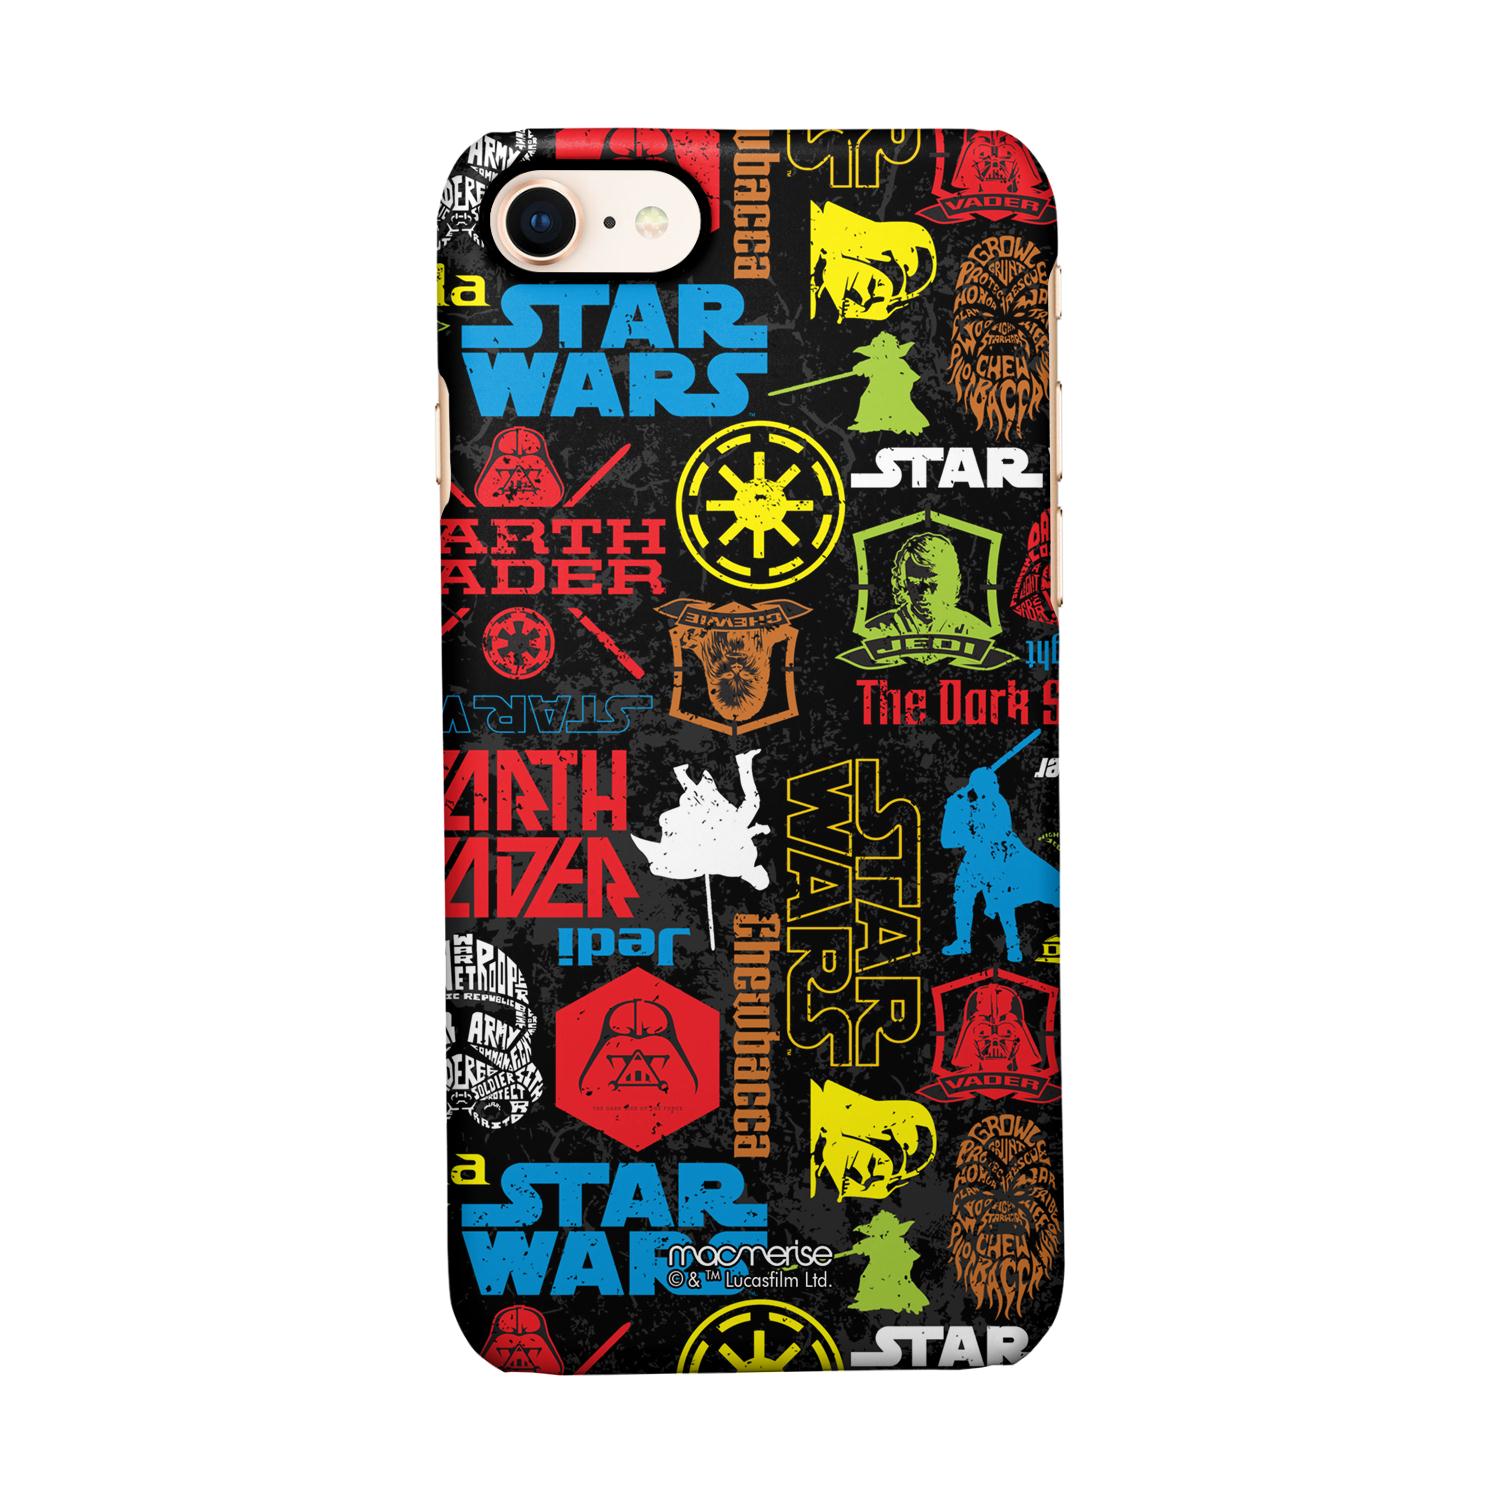 Buy Star wars mashup - Sleek Phone Case for iPhone 8 Online